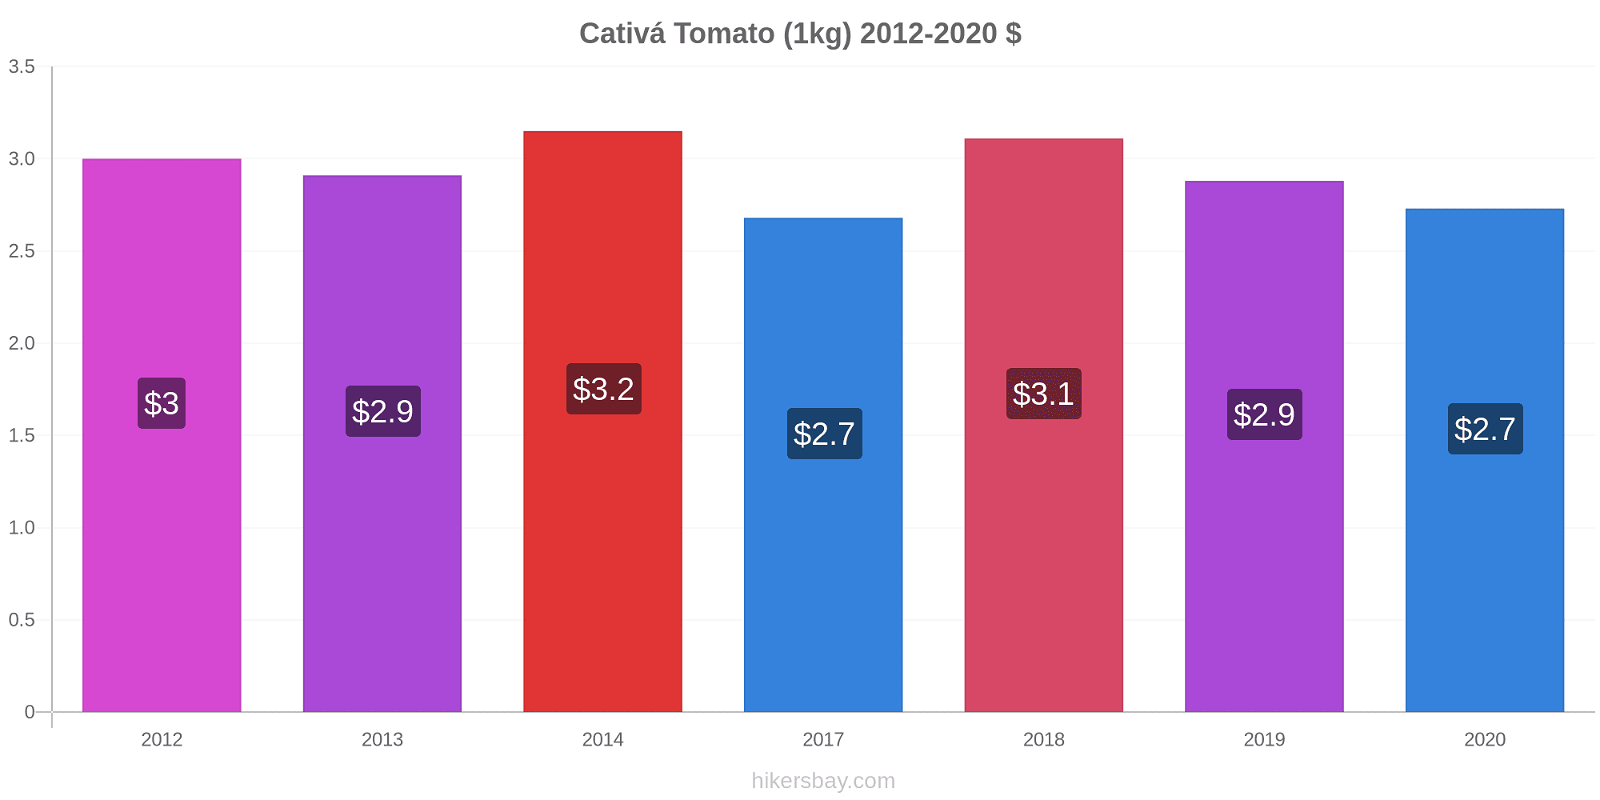 Cativá price changes Tomato (1kg) hikersbay.com